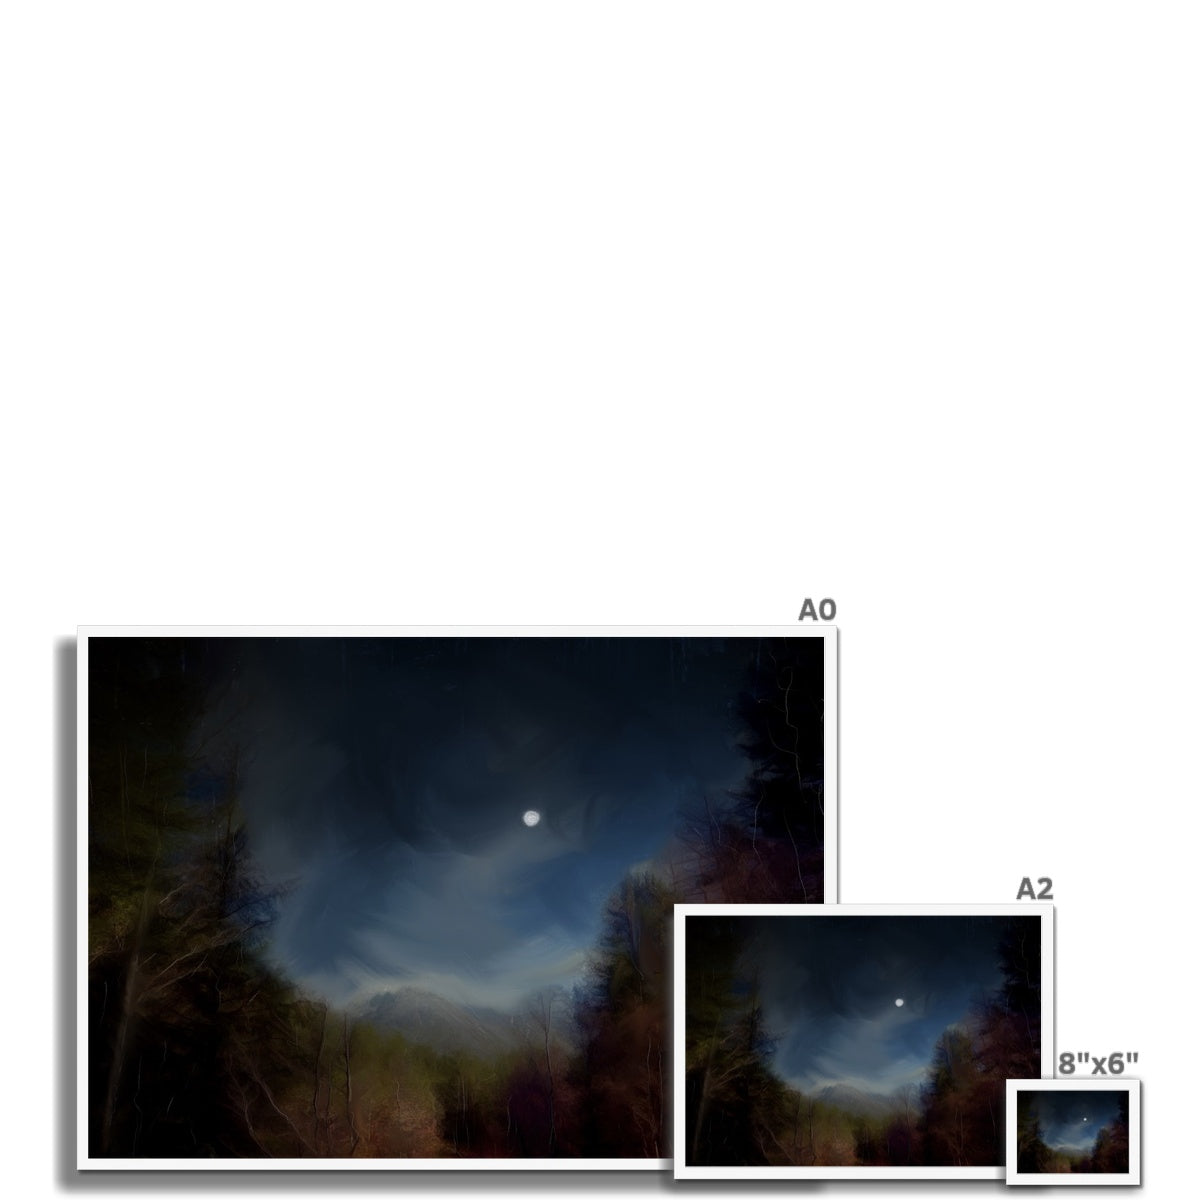 Glencoe Lochan Moonlight Painting | Framed Prints From Scotland-Framed Prints-Scottish Lochs & Mountains Art Gallery-Paintings, Prints, Homeware, Art Gifts From Scotland By Scottish Artist Kevin Hunter